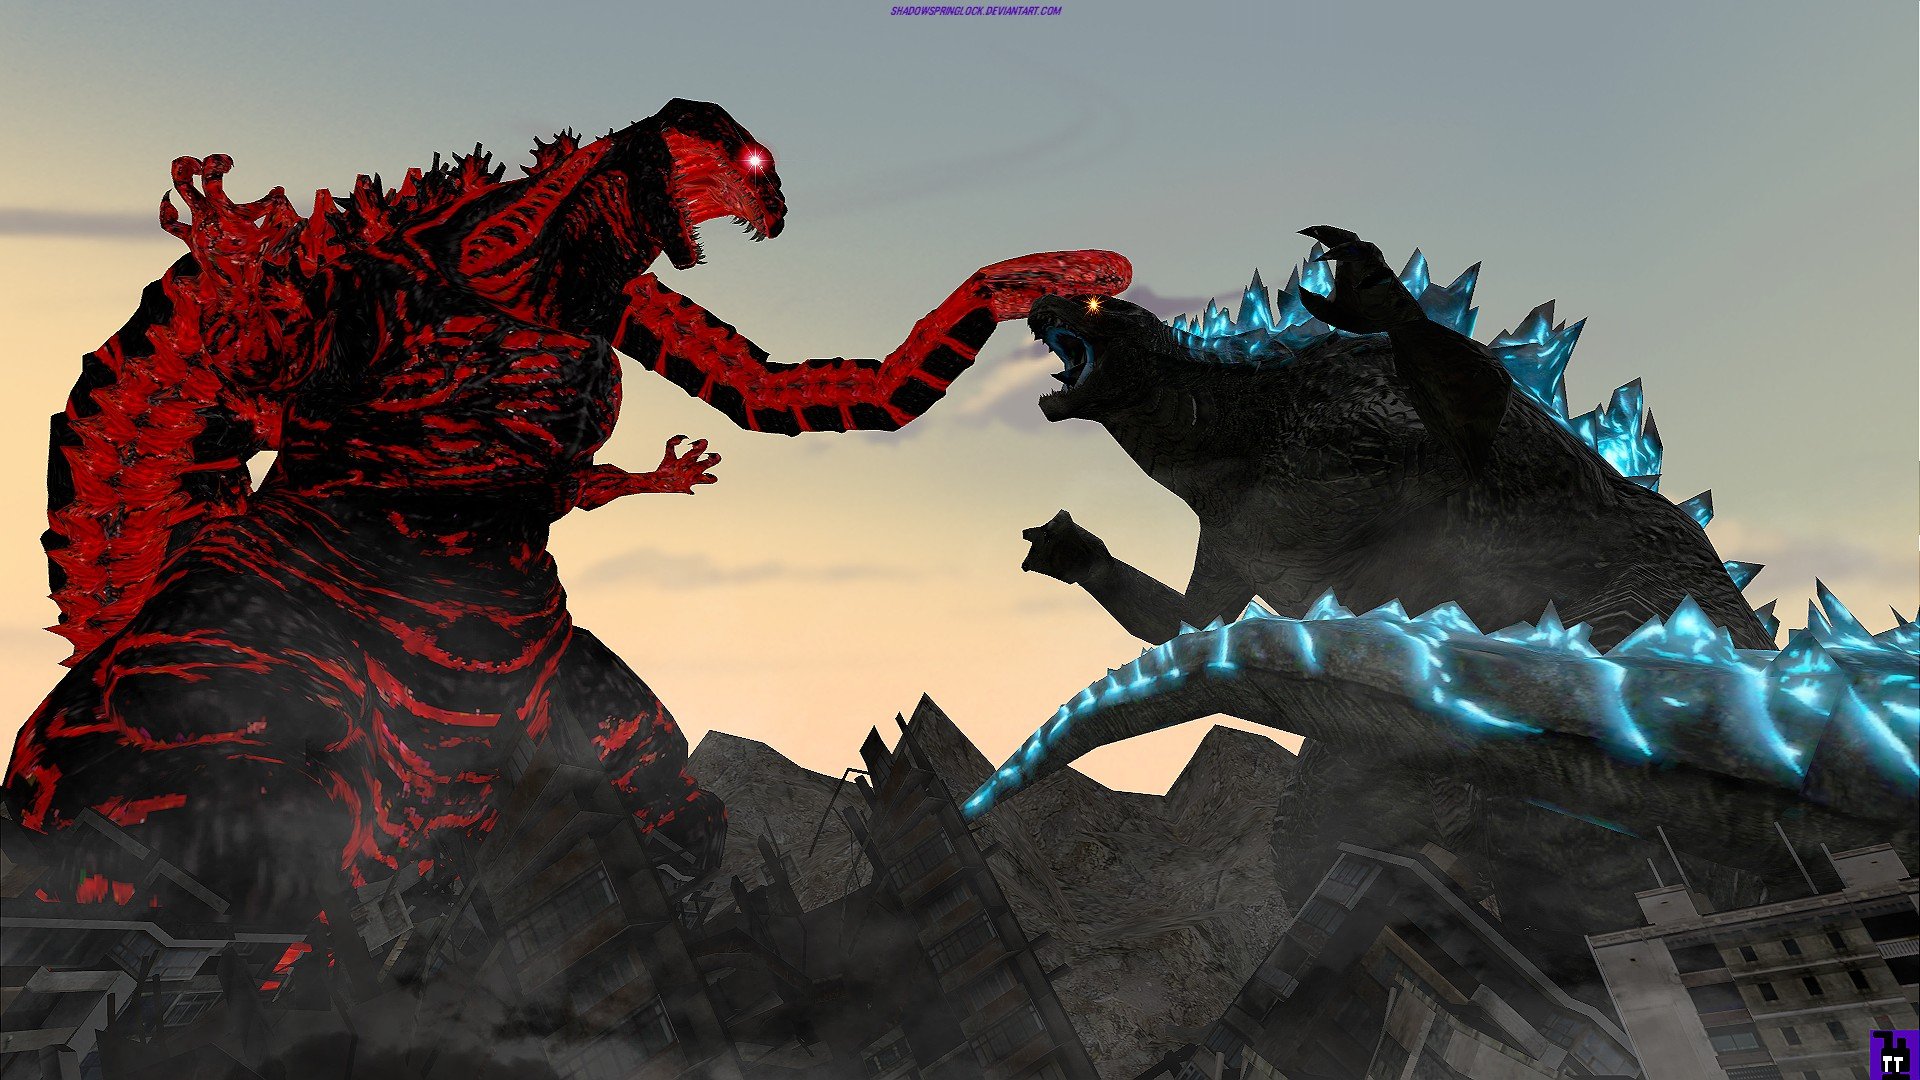 Wallpaper Godzilla Godzilla 2014 images for desktop section фильмы   download